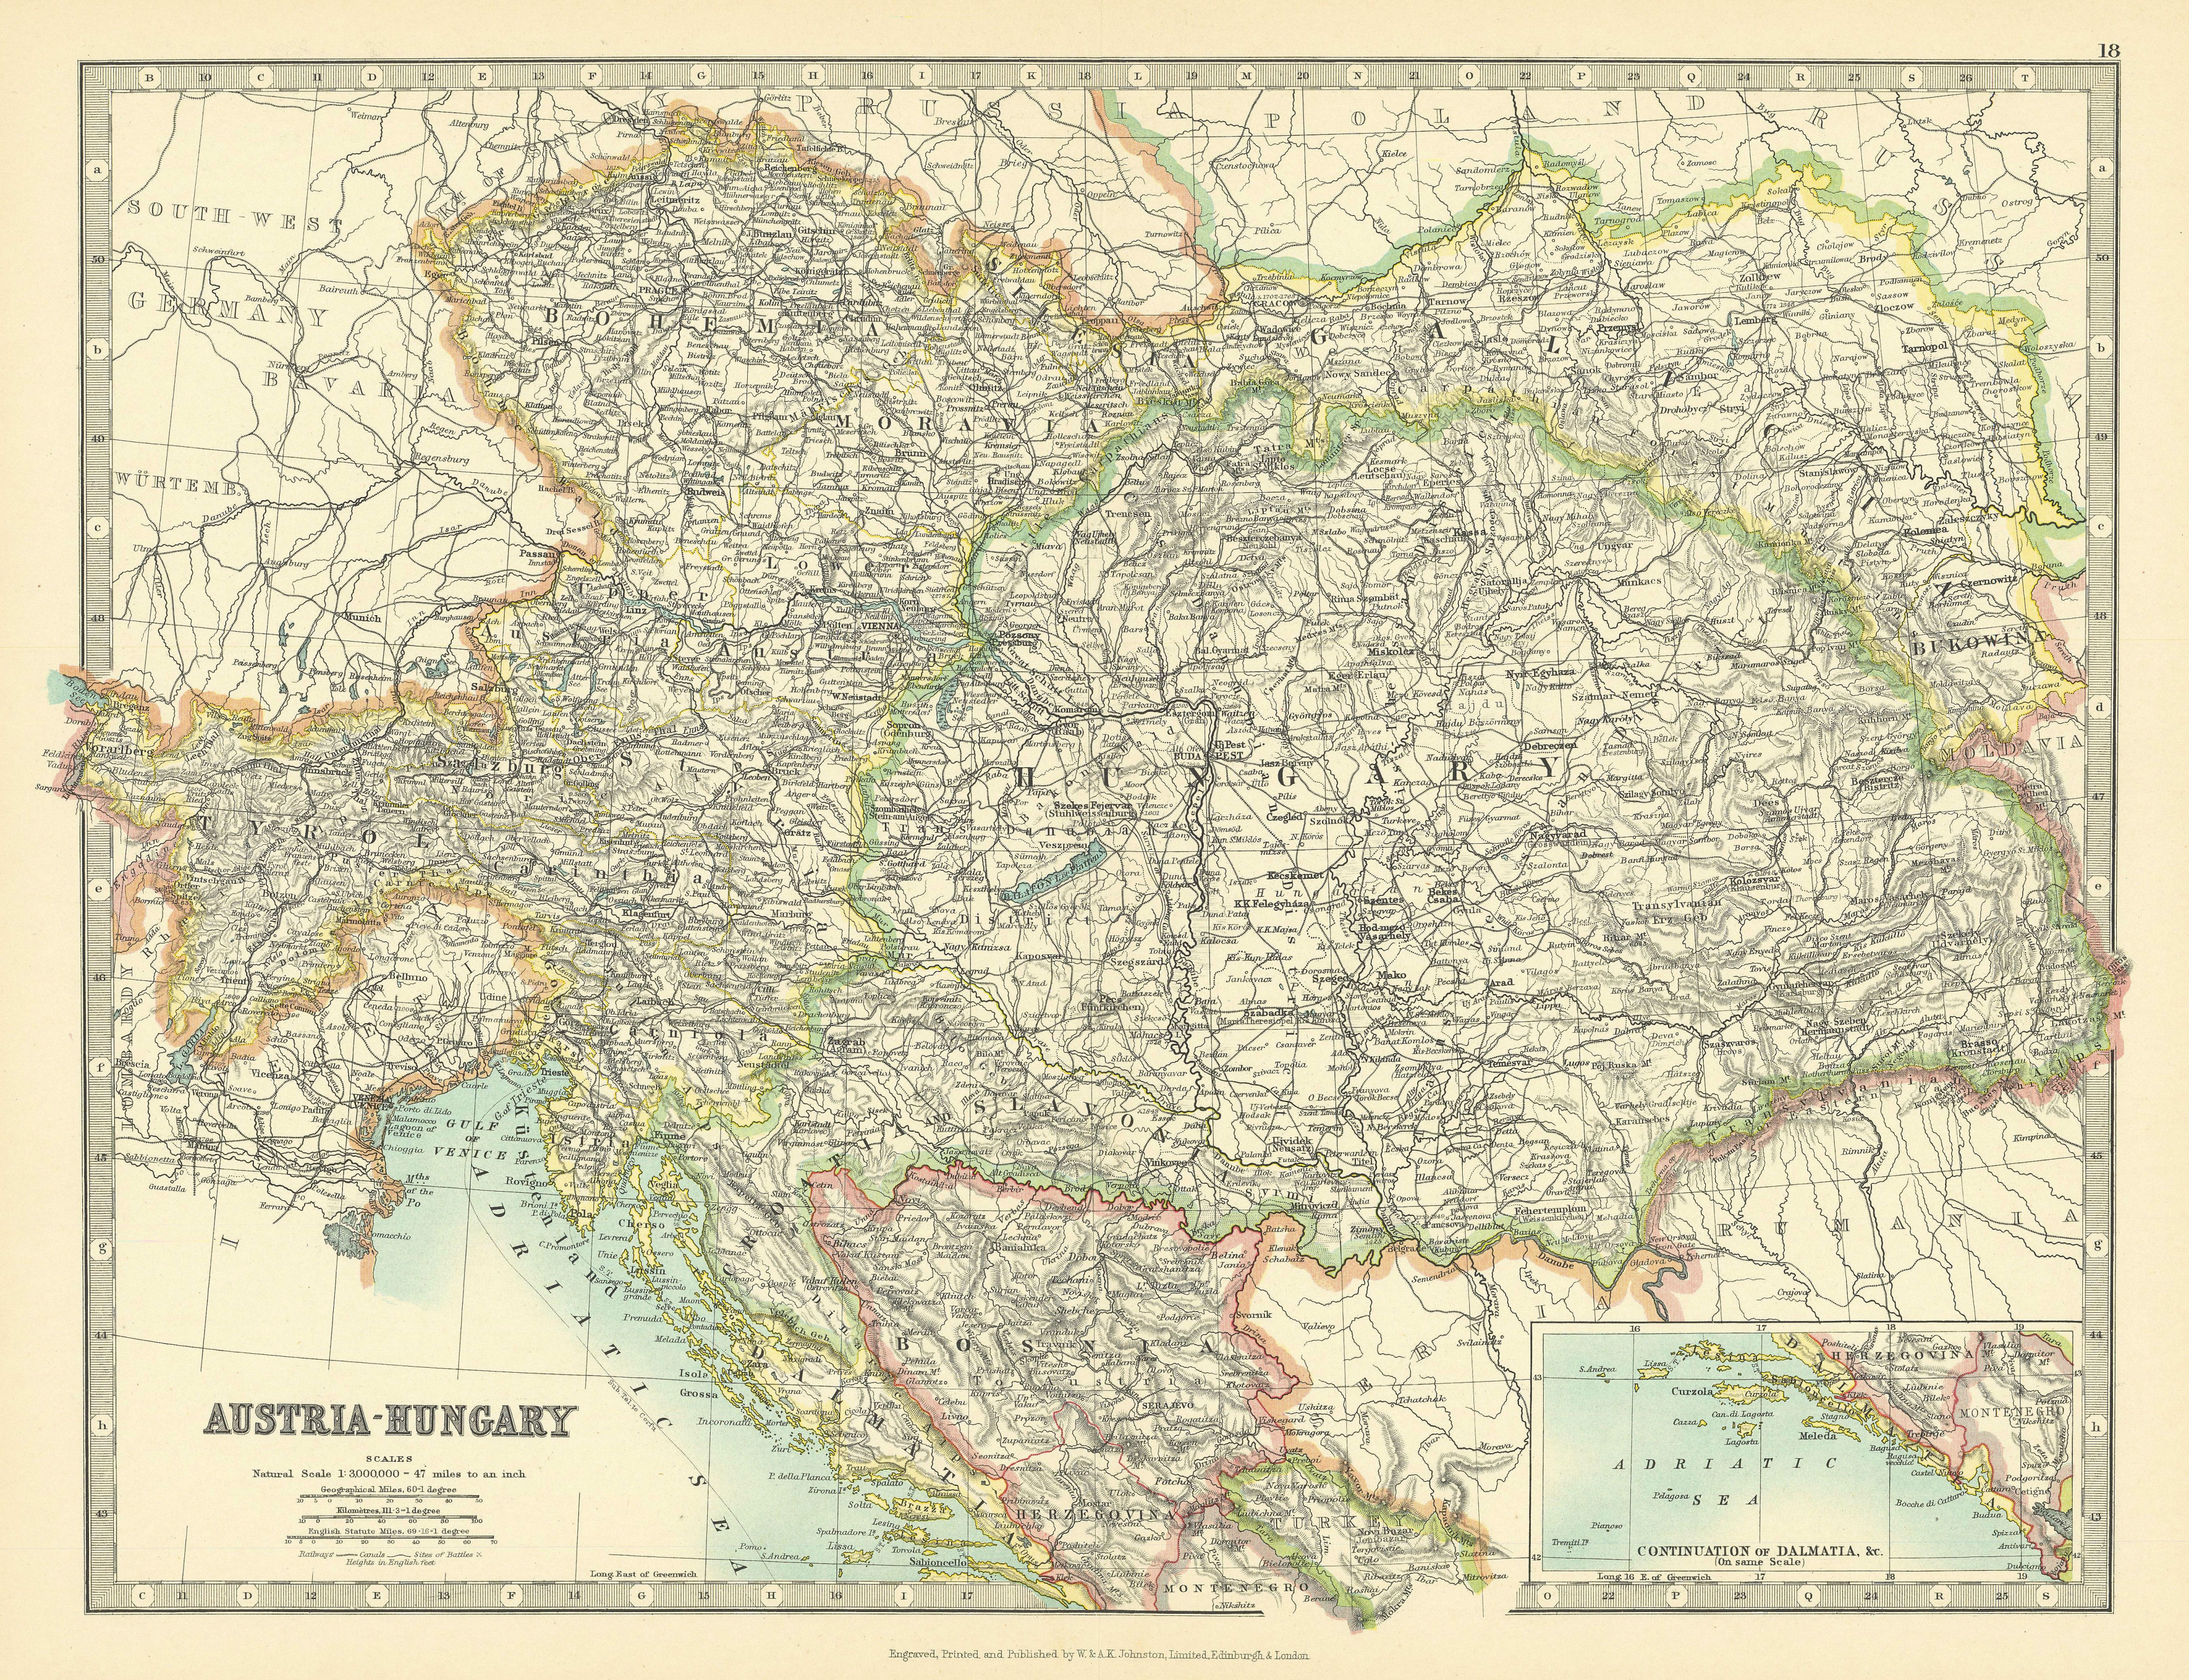 AUSTRIA-HUNGARY. Dalmatian coast. Bosnia. Railways. JOHNSTON 1911 old map